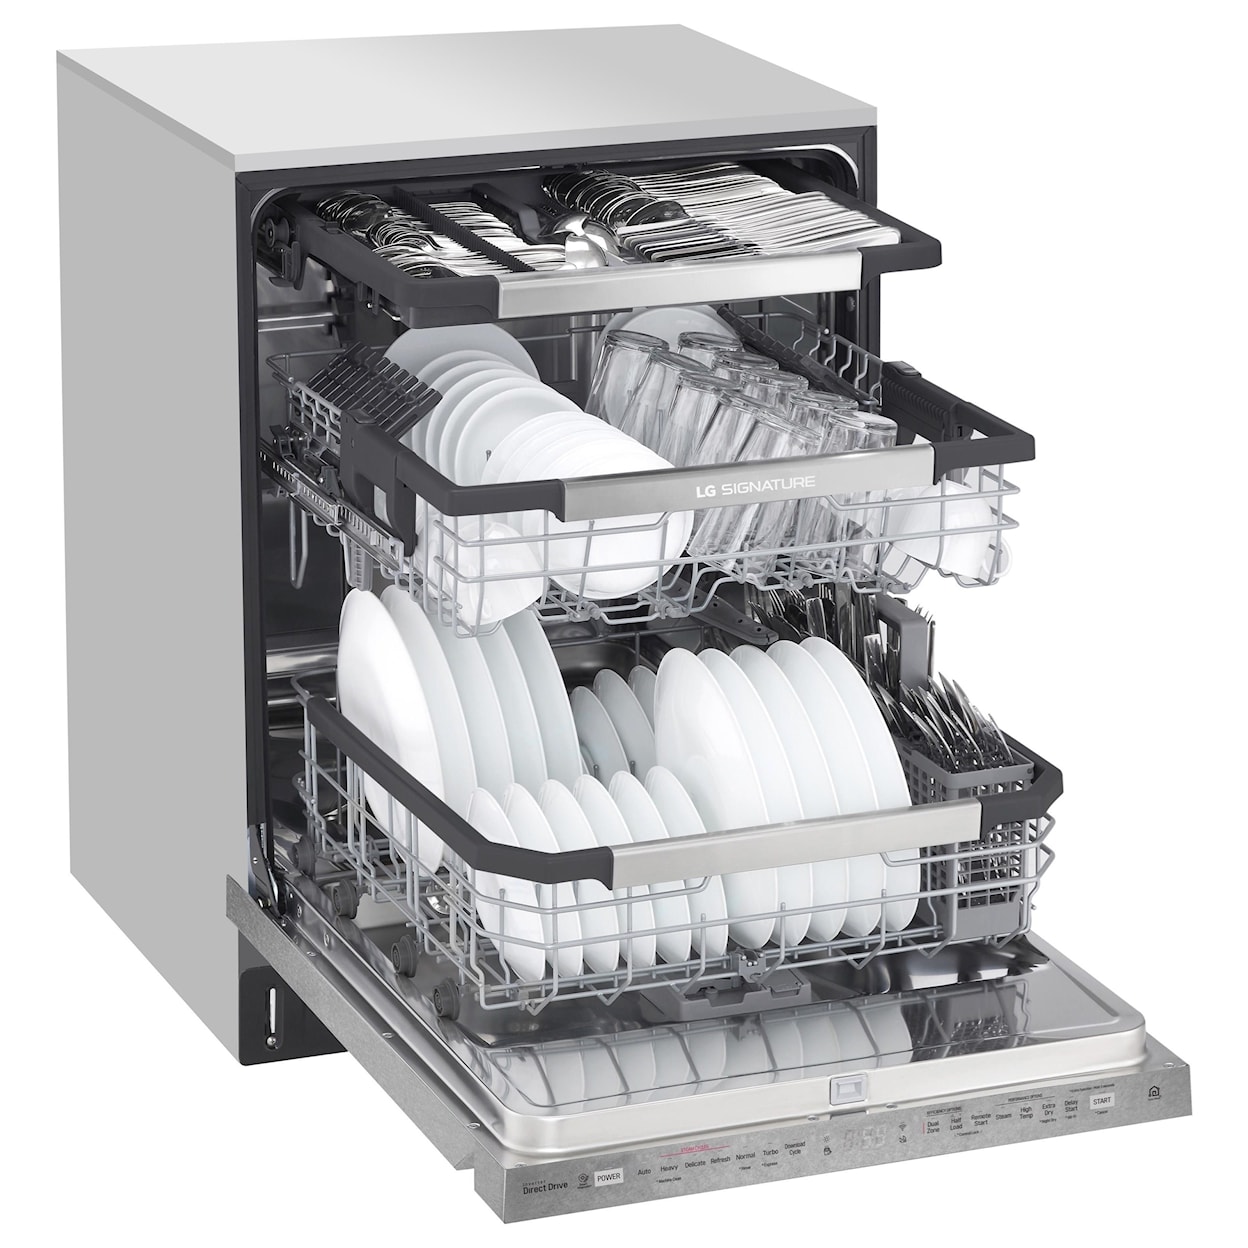 LG Appliances Dishwashers LG SIGNATURE Top Control Smart Dishwasher 